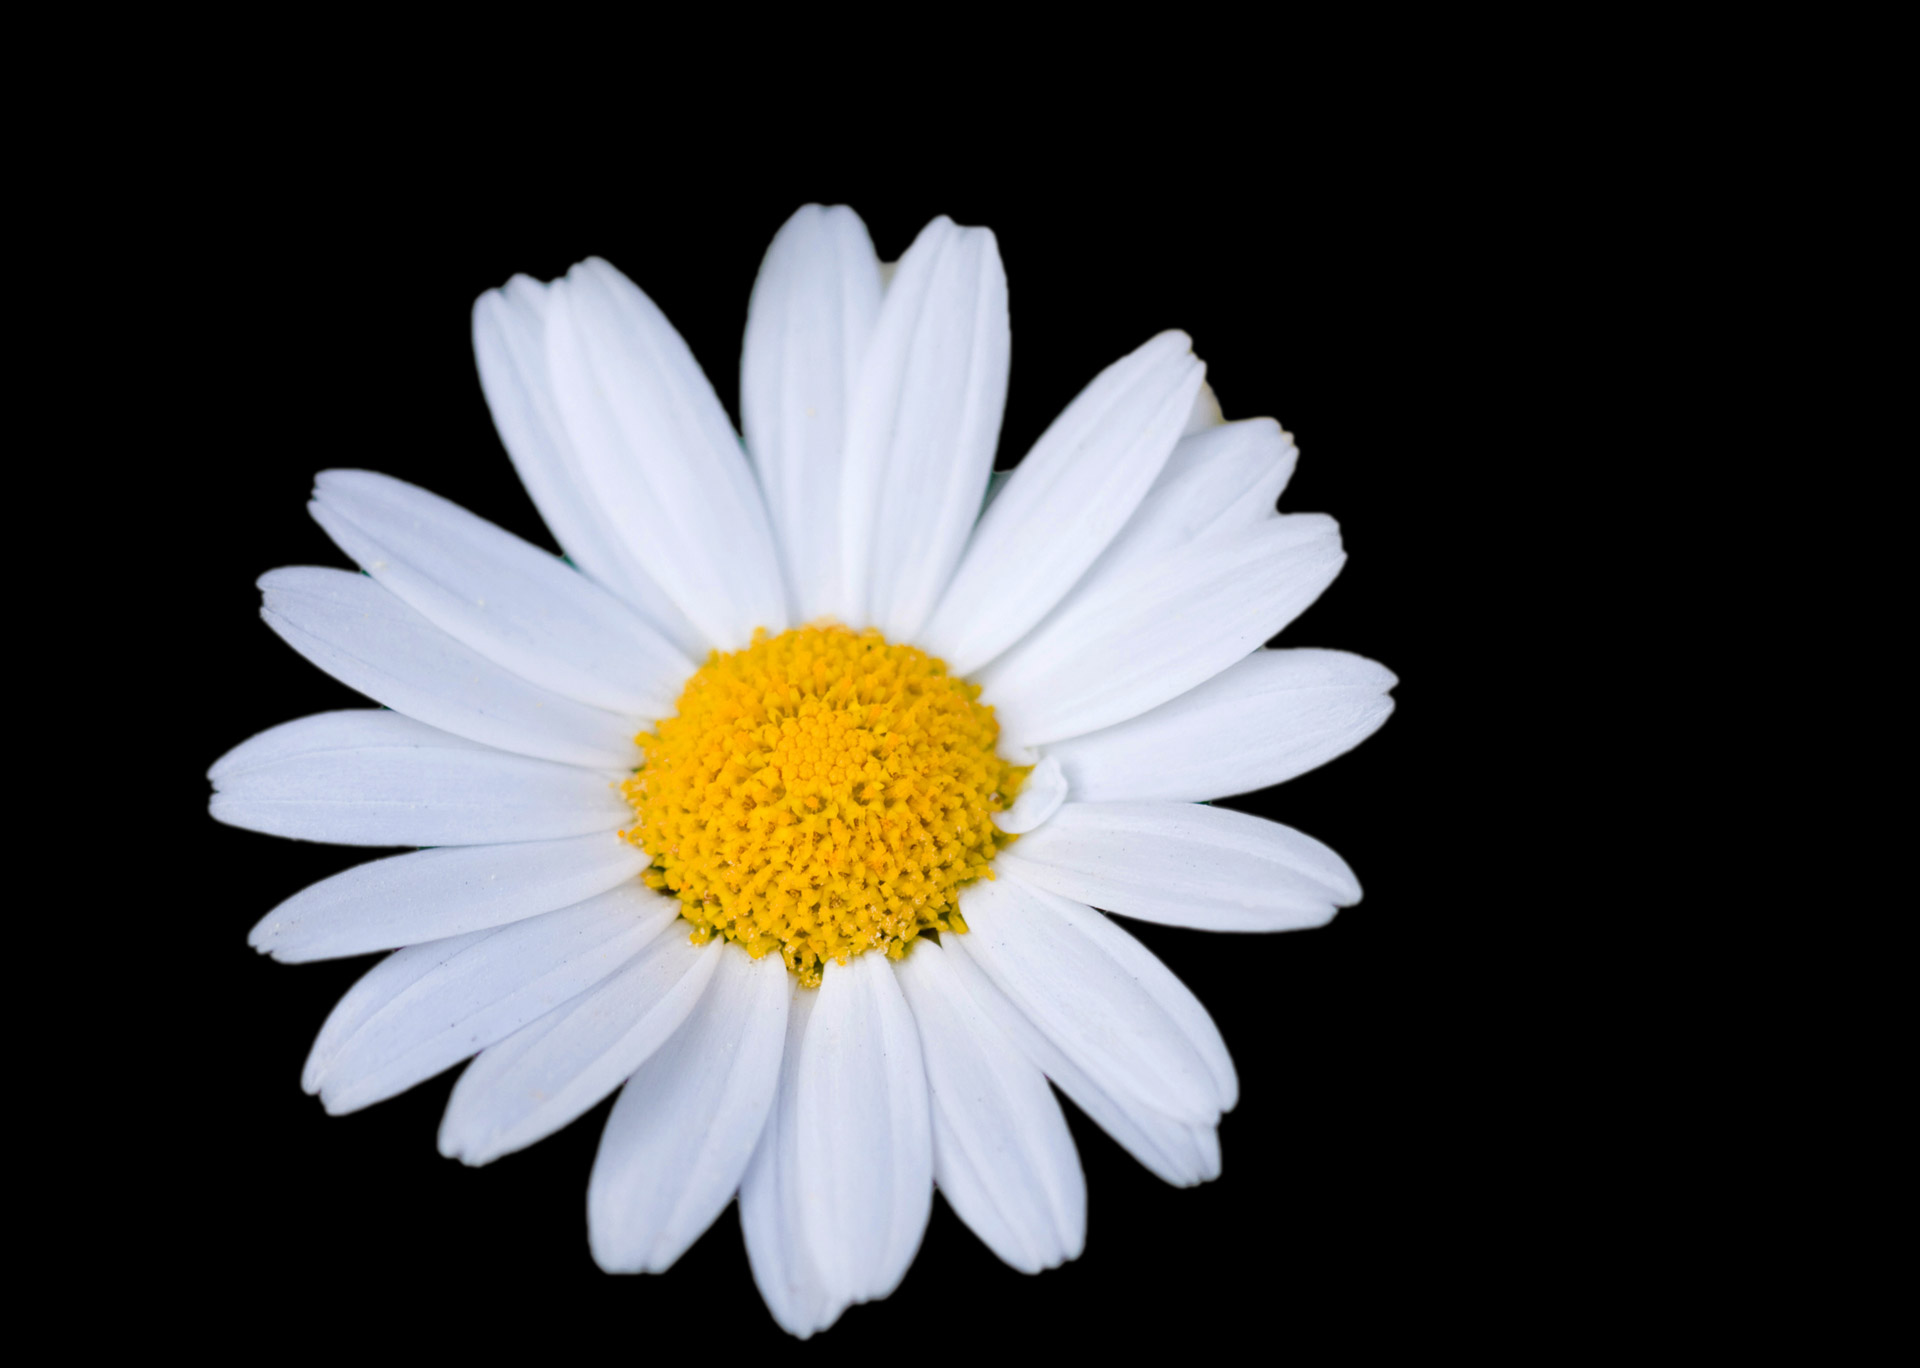 Daisy Flower